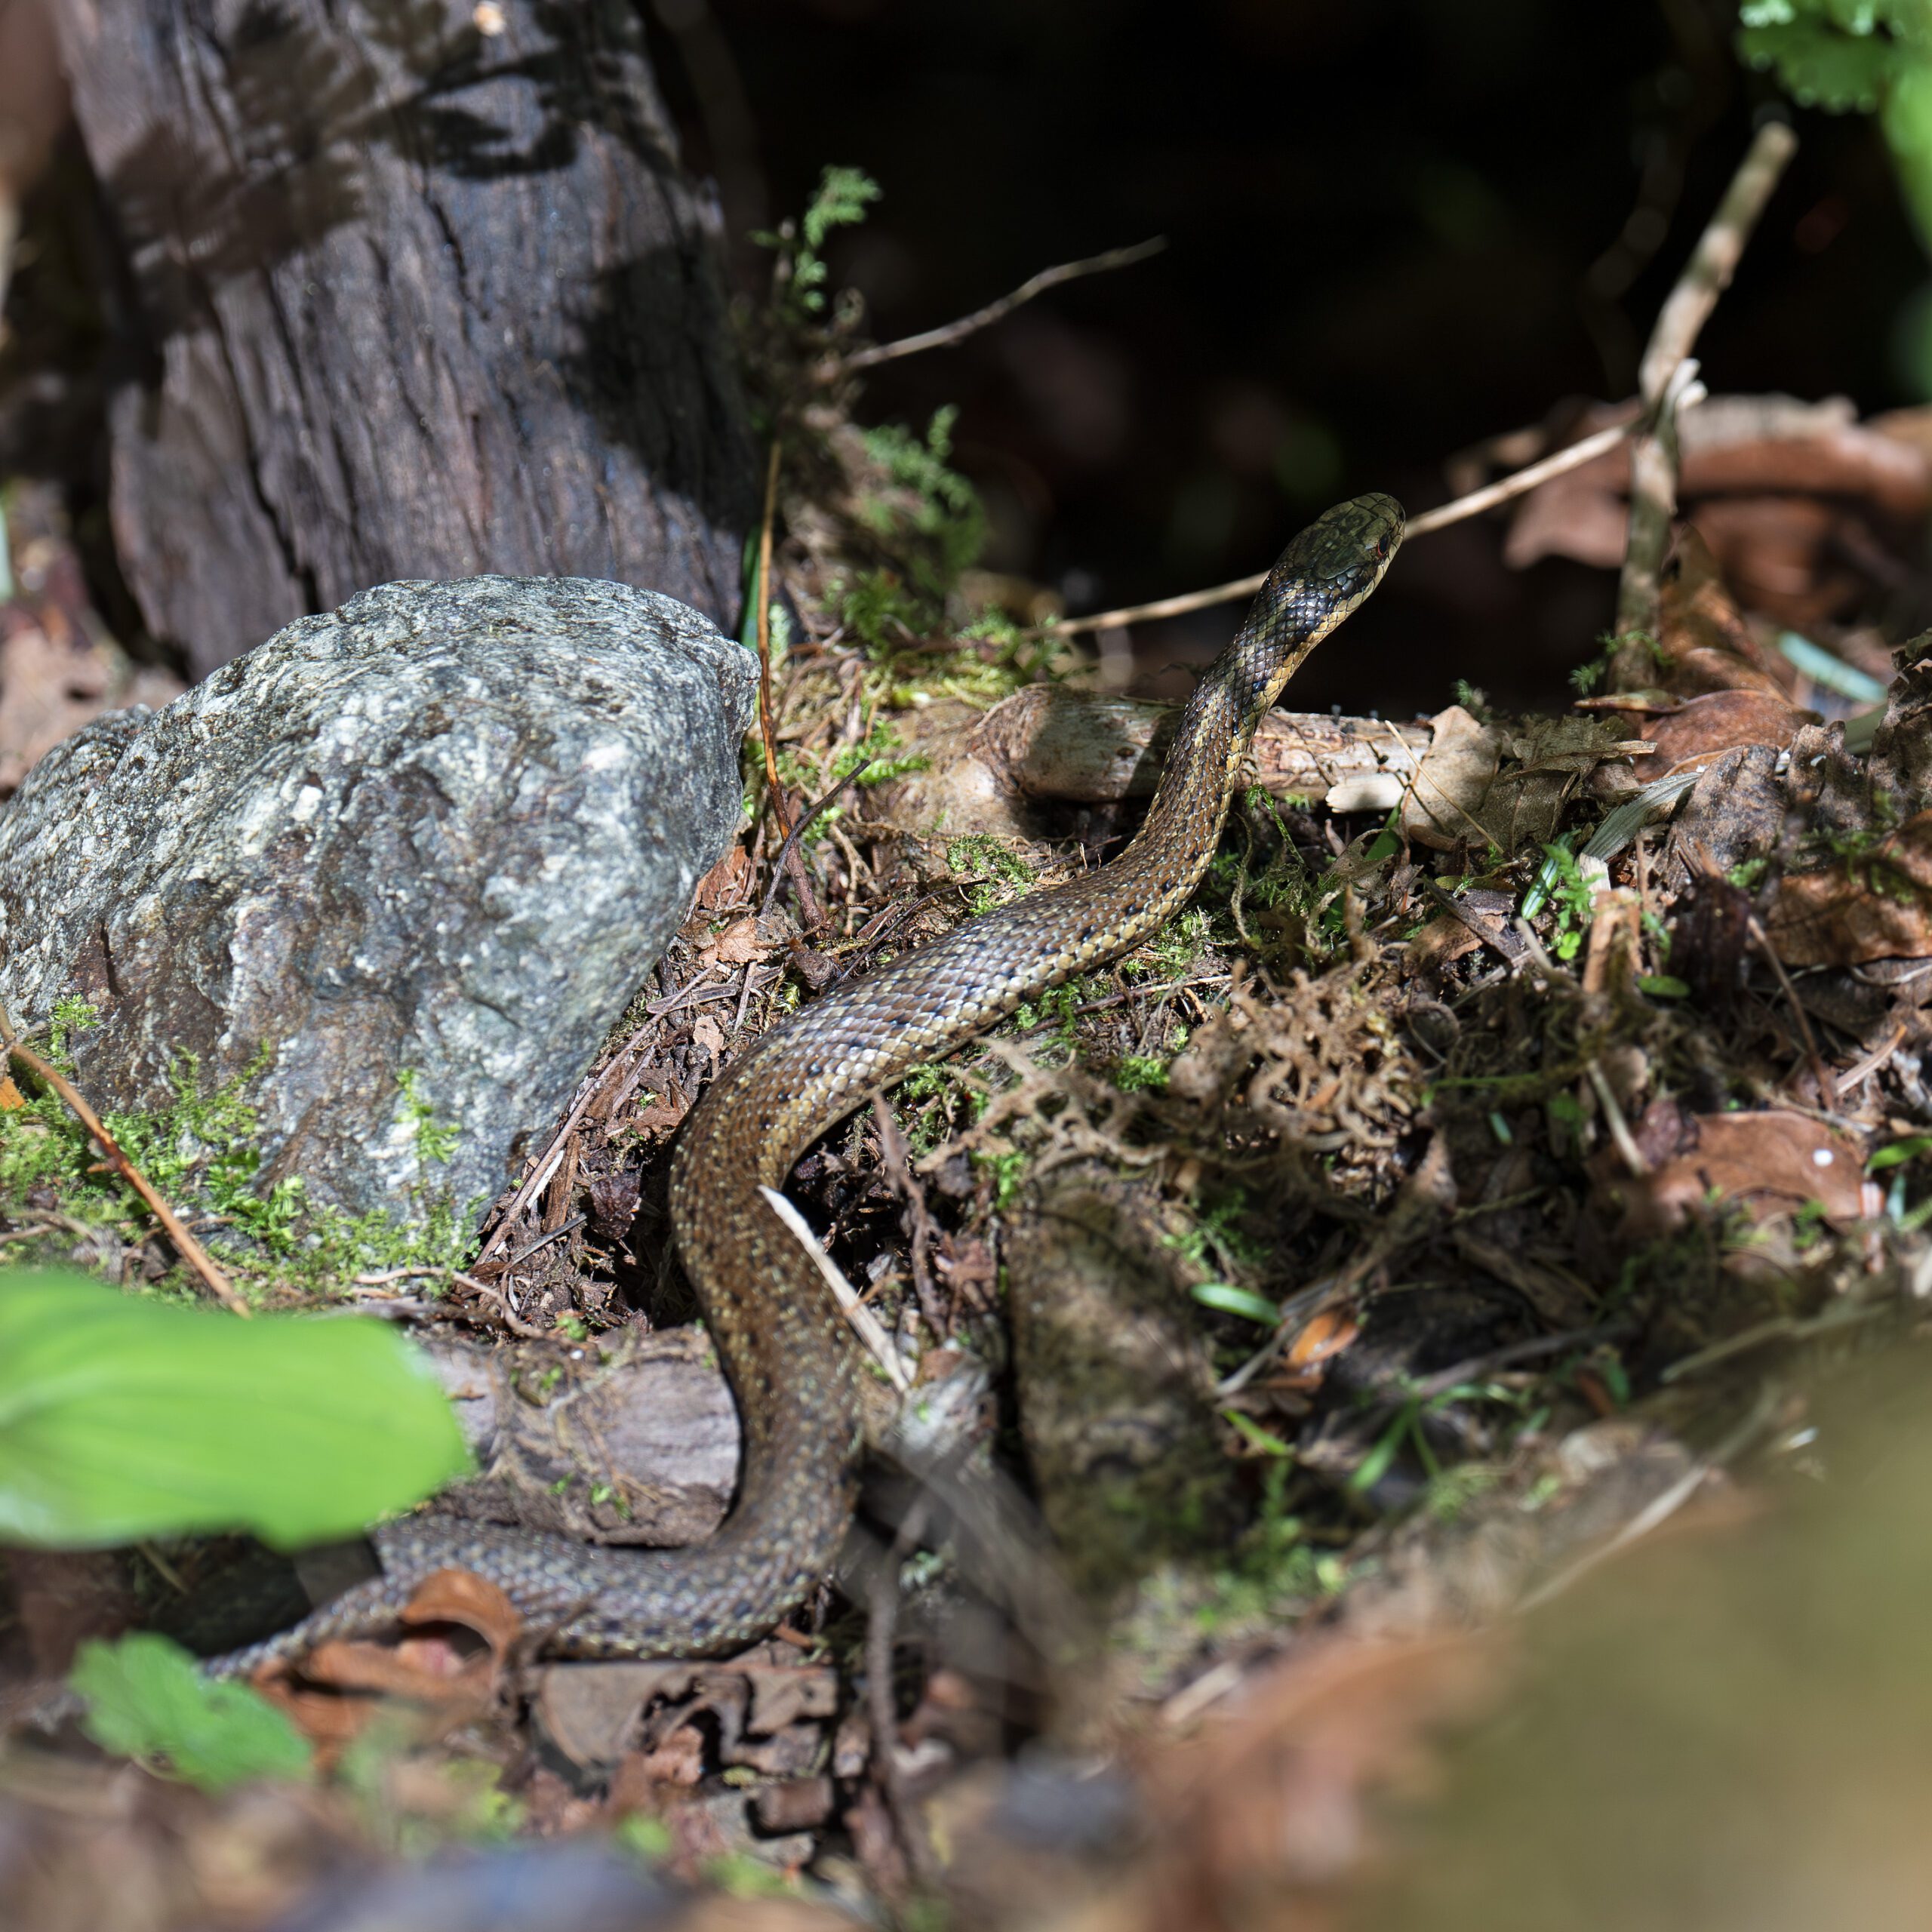 A male garter snake.